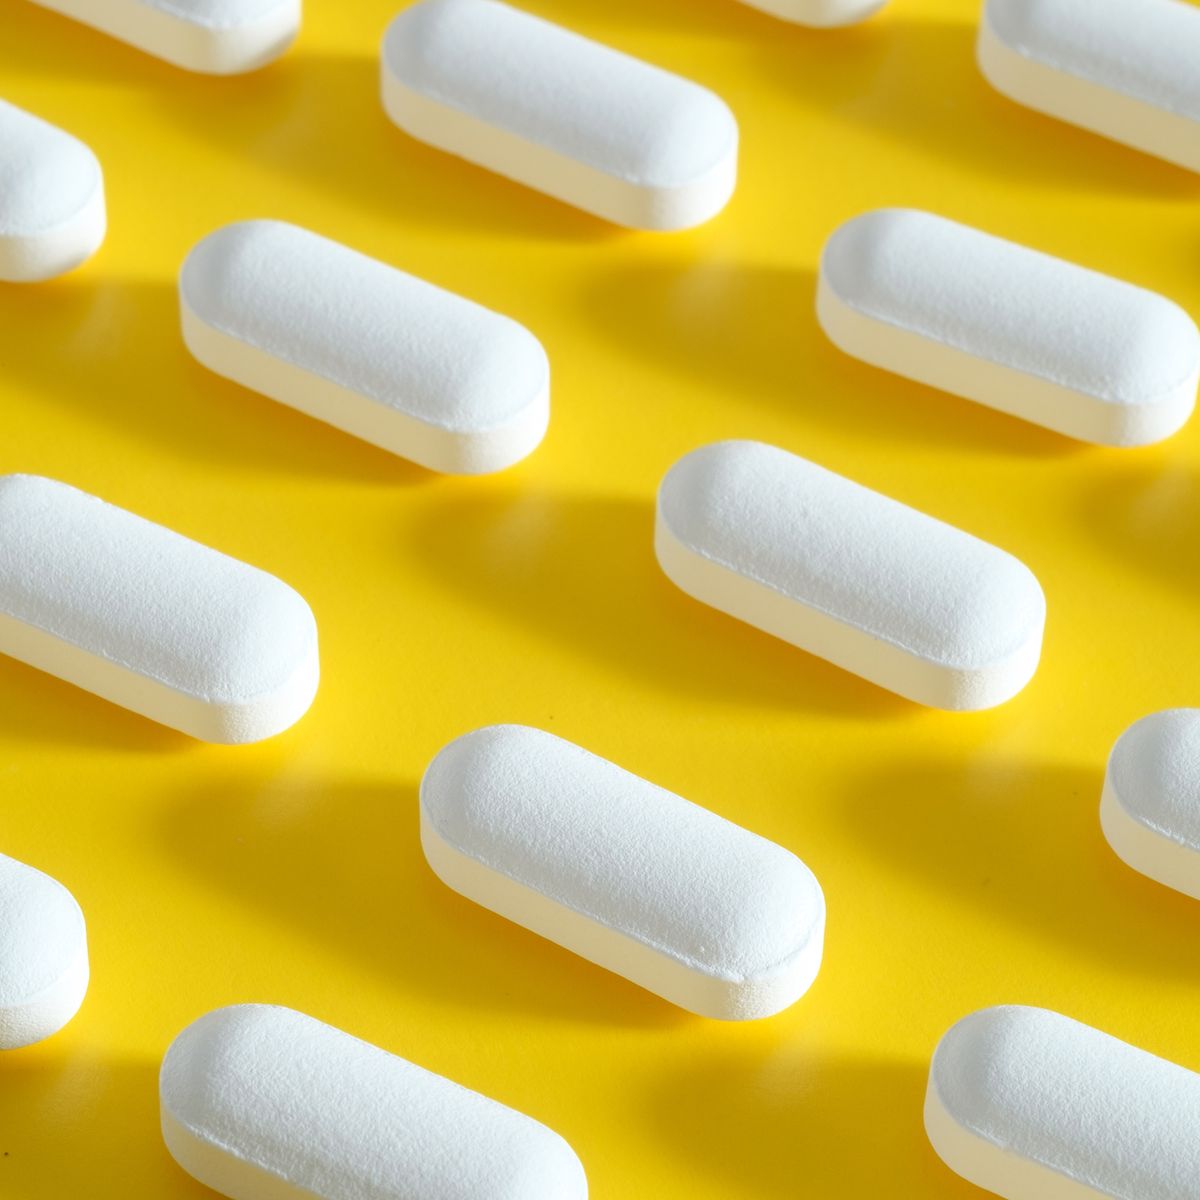 When to Skip Antibiotics - Antibiotic Resistance